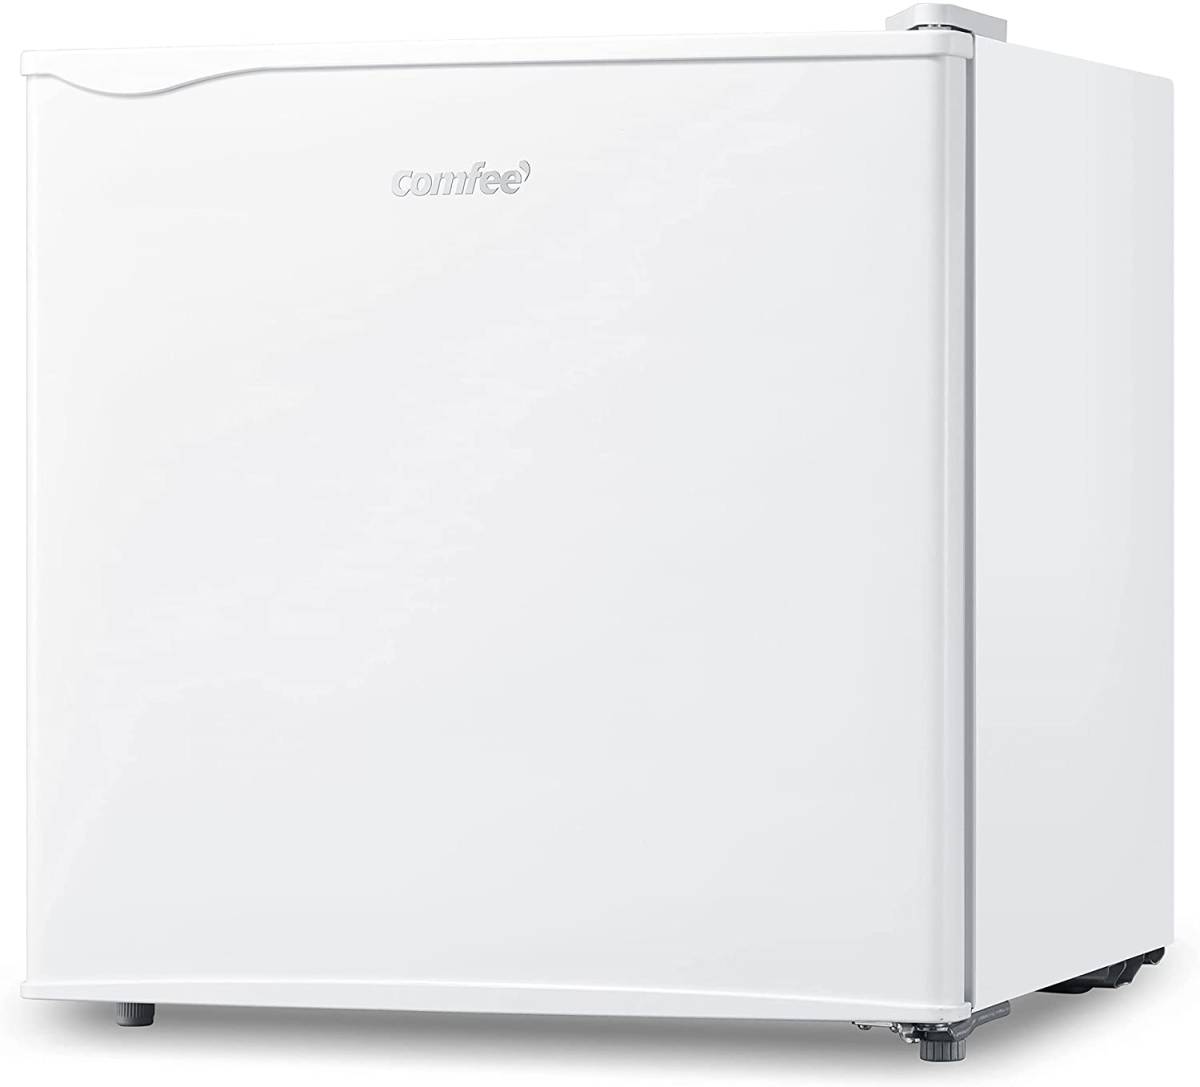  COMFEE' 冷蔵庫 小型 一人暮らし 45L 幅47cm 右開き コンパクト 静音 省エネ ミニ冷蔵庫 ホワイト RCD45WH/E_画像7